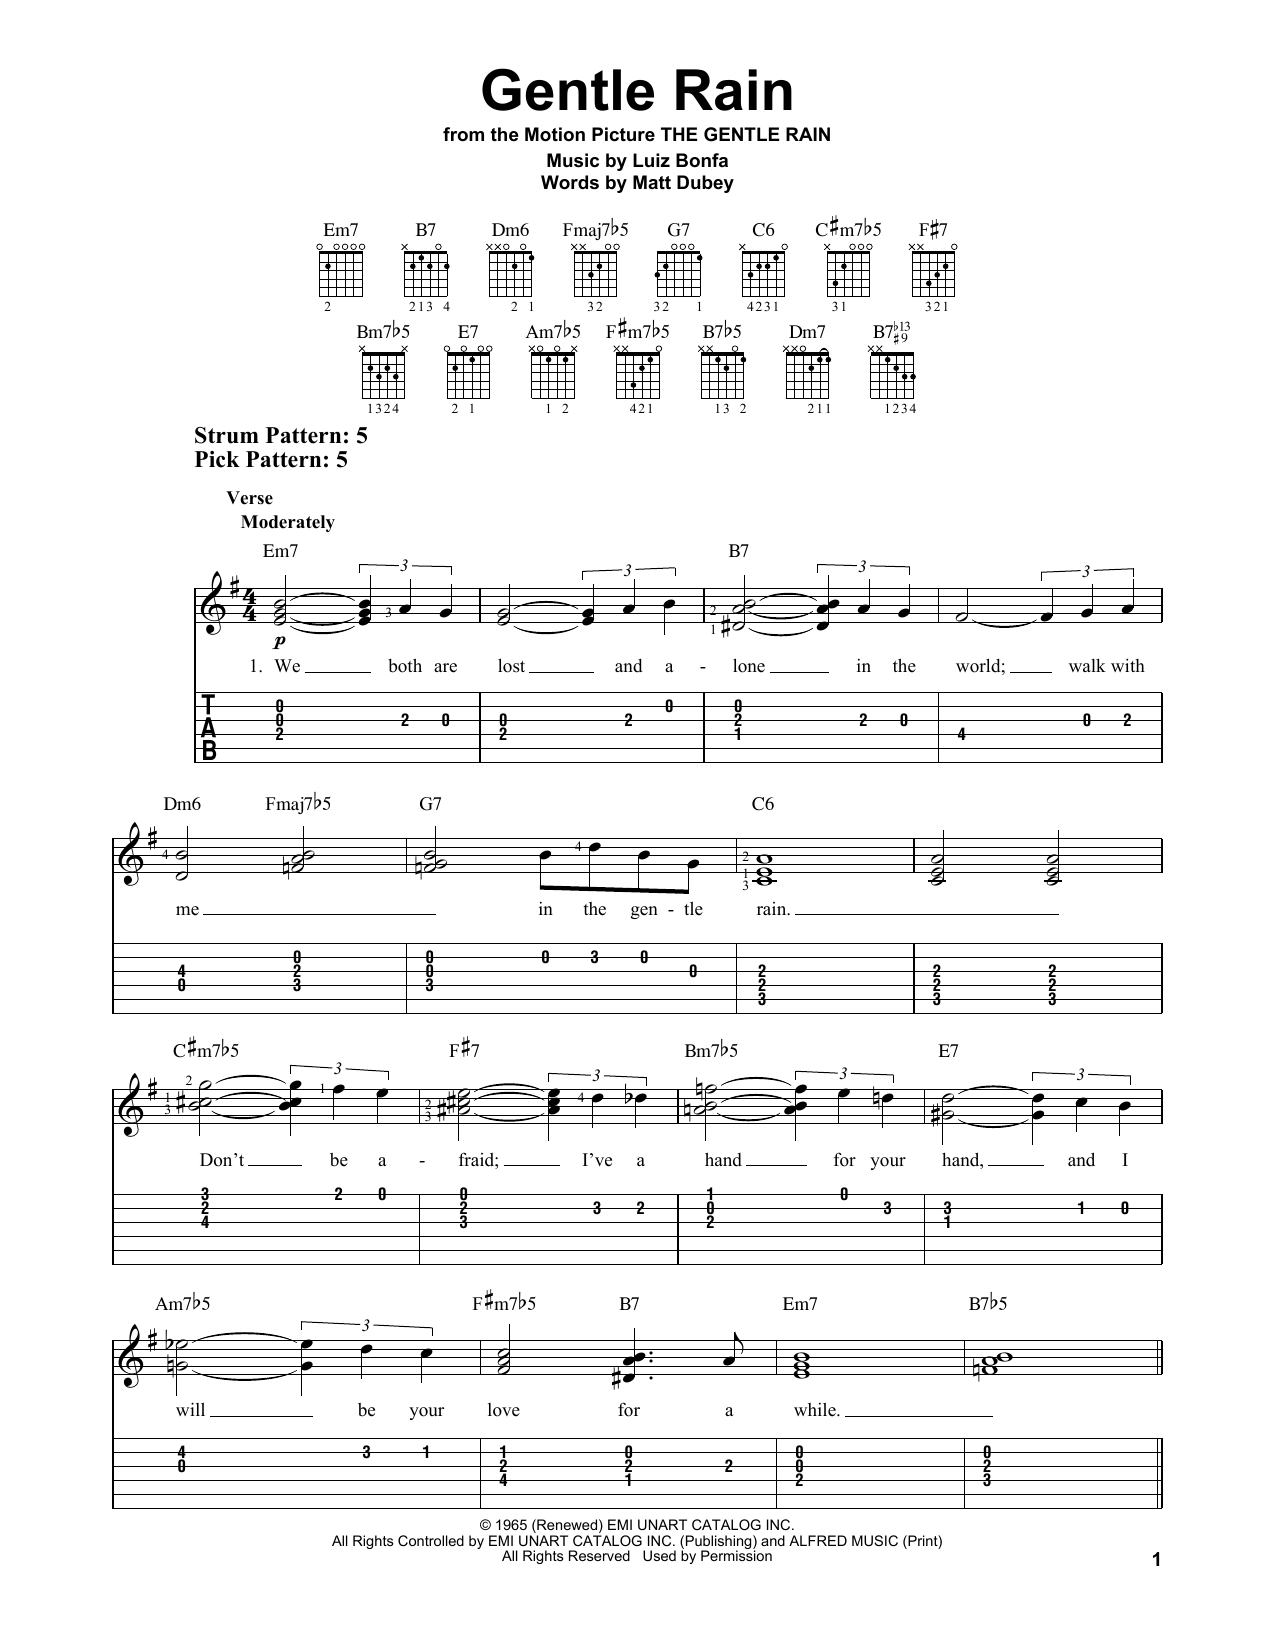 Luiz Bonfa Gentle Rain Sheet Music Notes & Chords for Melody Line, Lyrics & Chords - Download or Print PDF